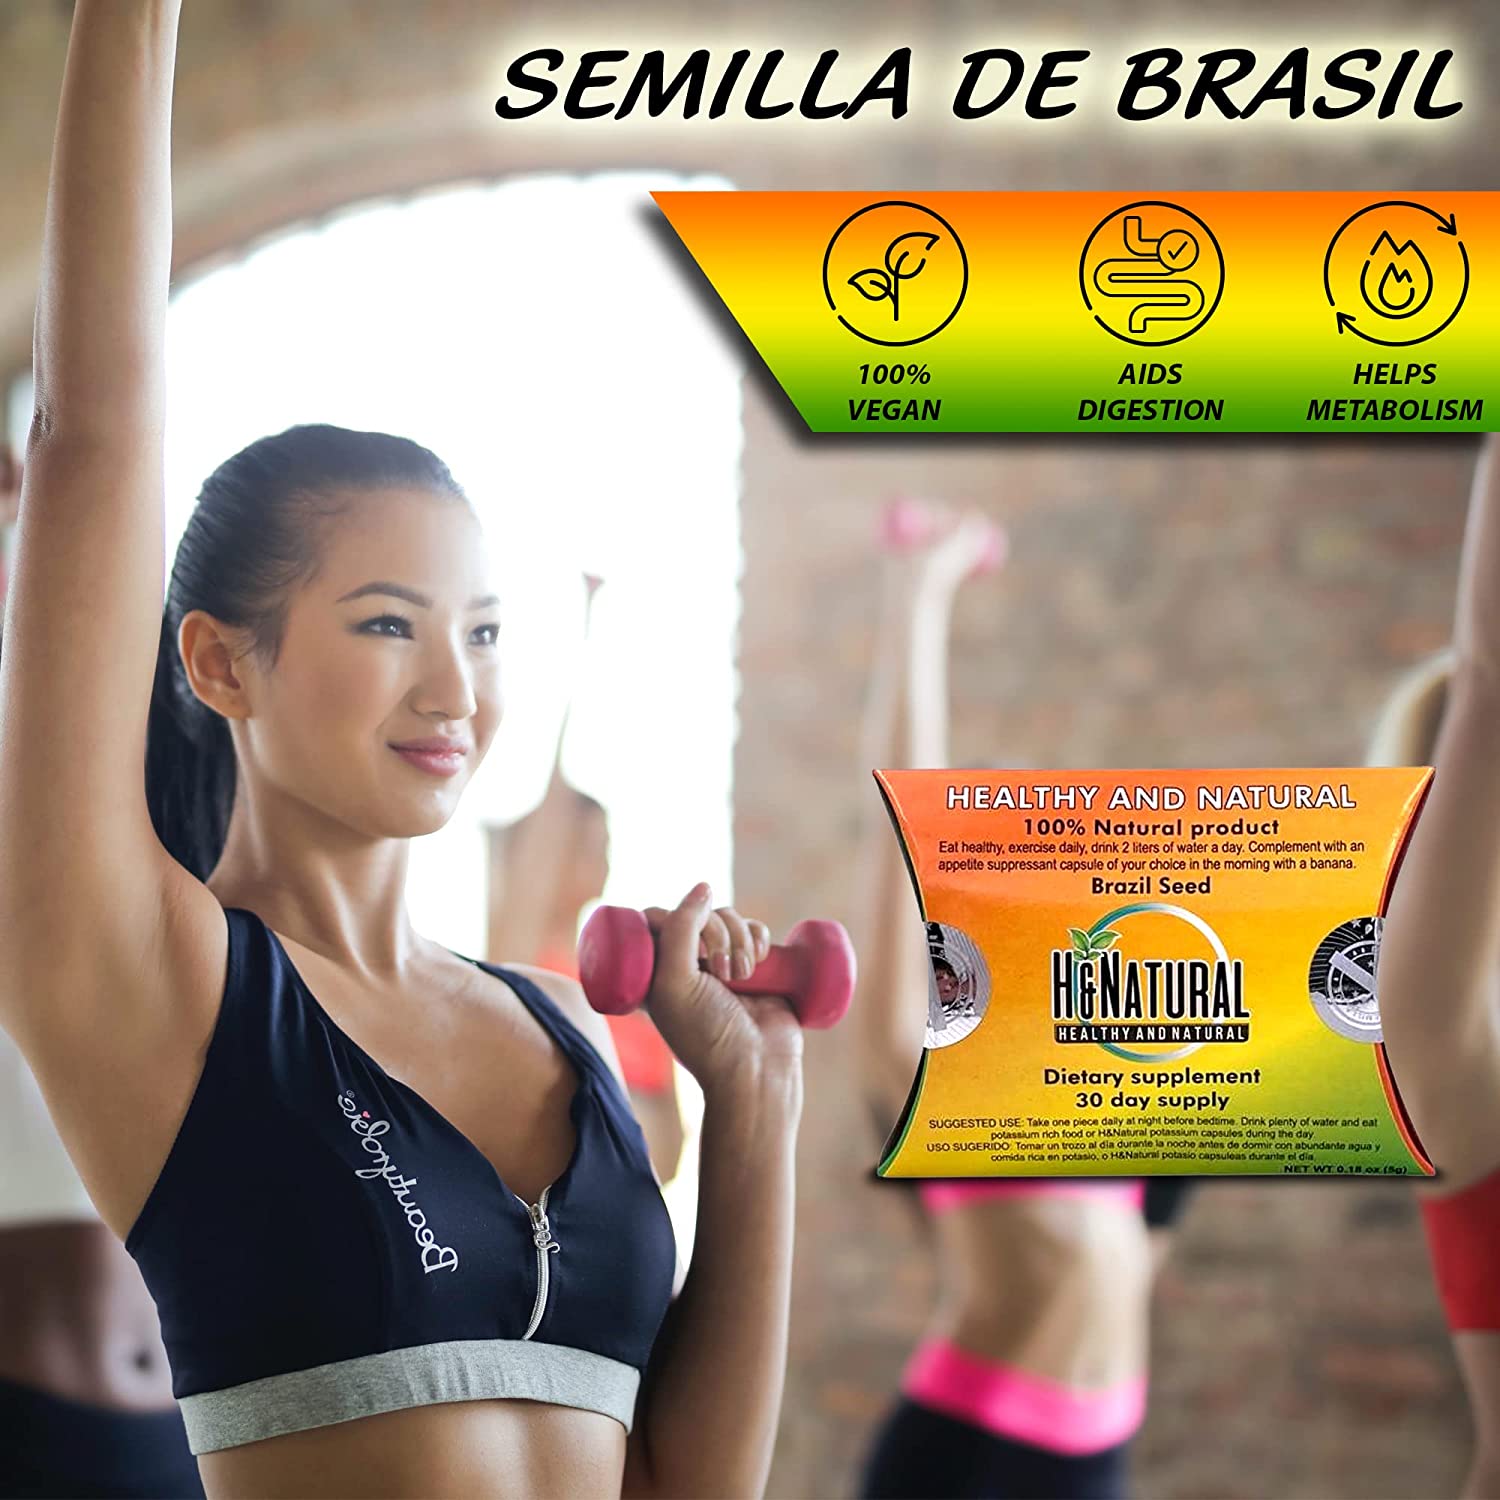 Semilla de Brazil 100% Authentic Brasil Seed Supplement Yellow Box!